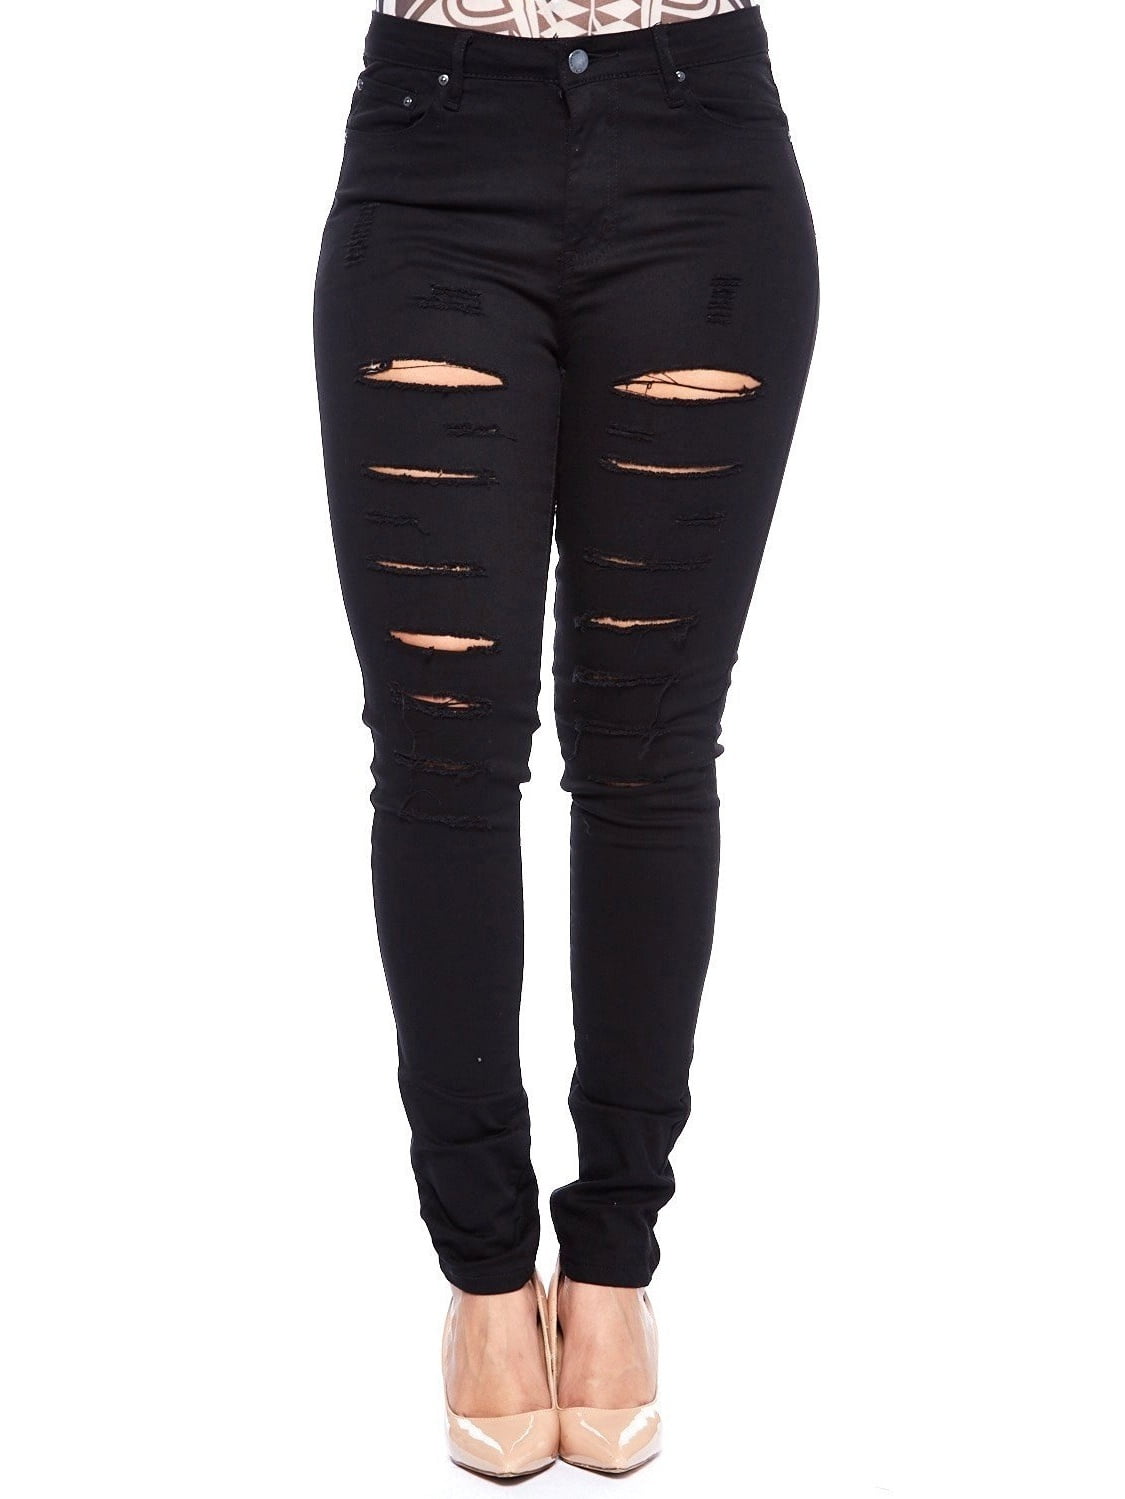 black skinny jeans walmart